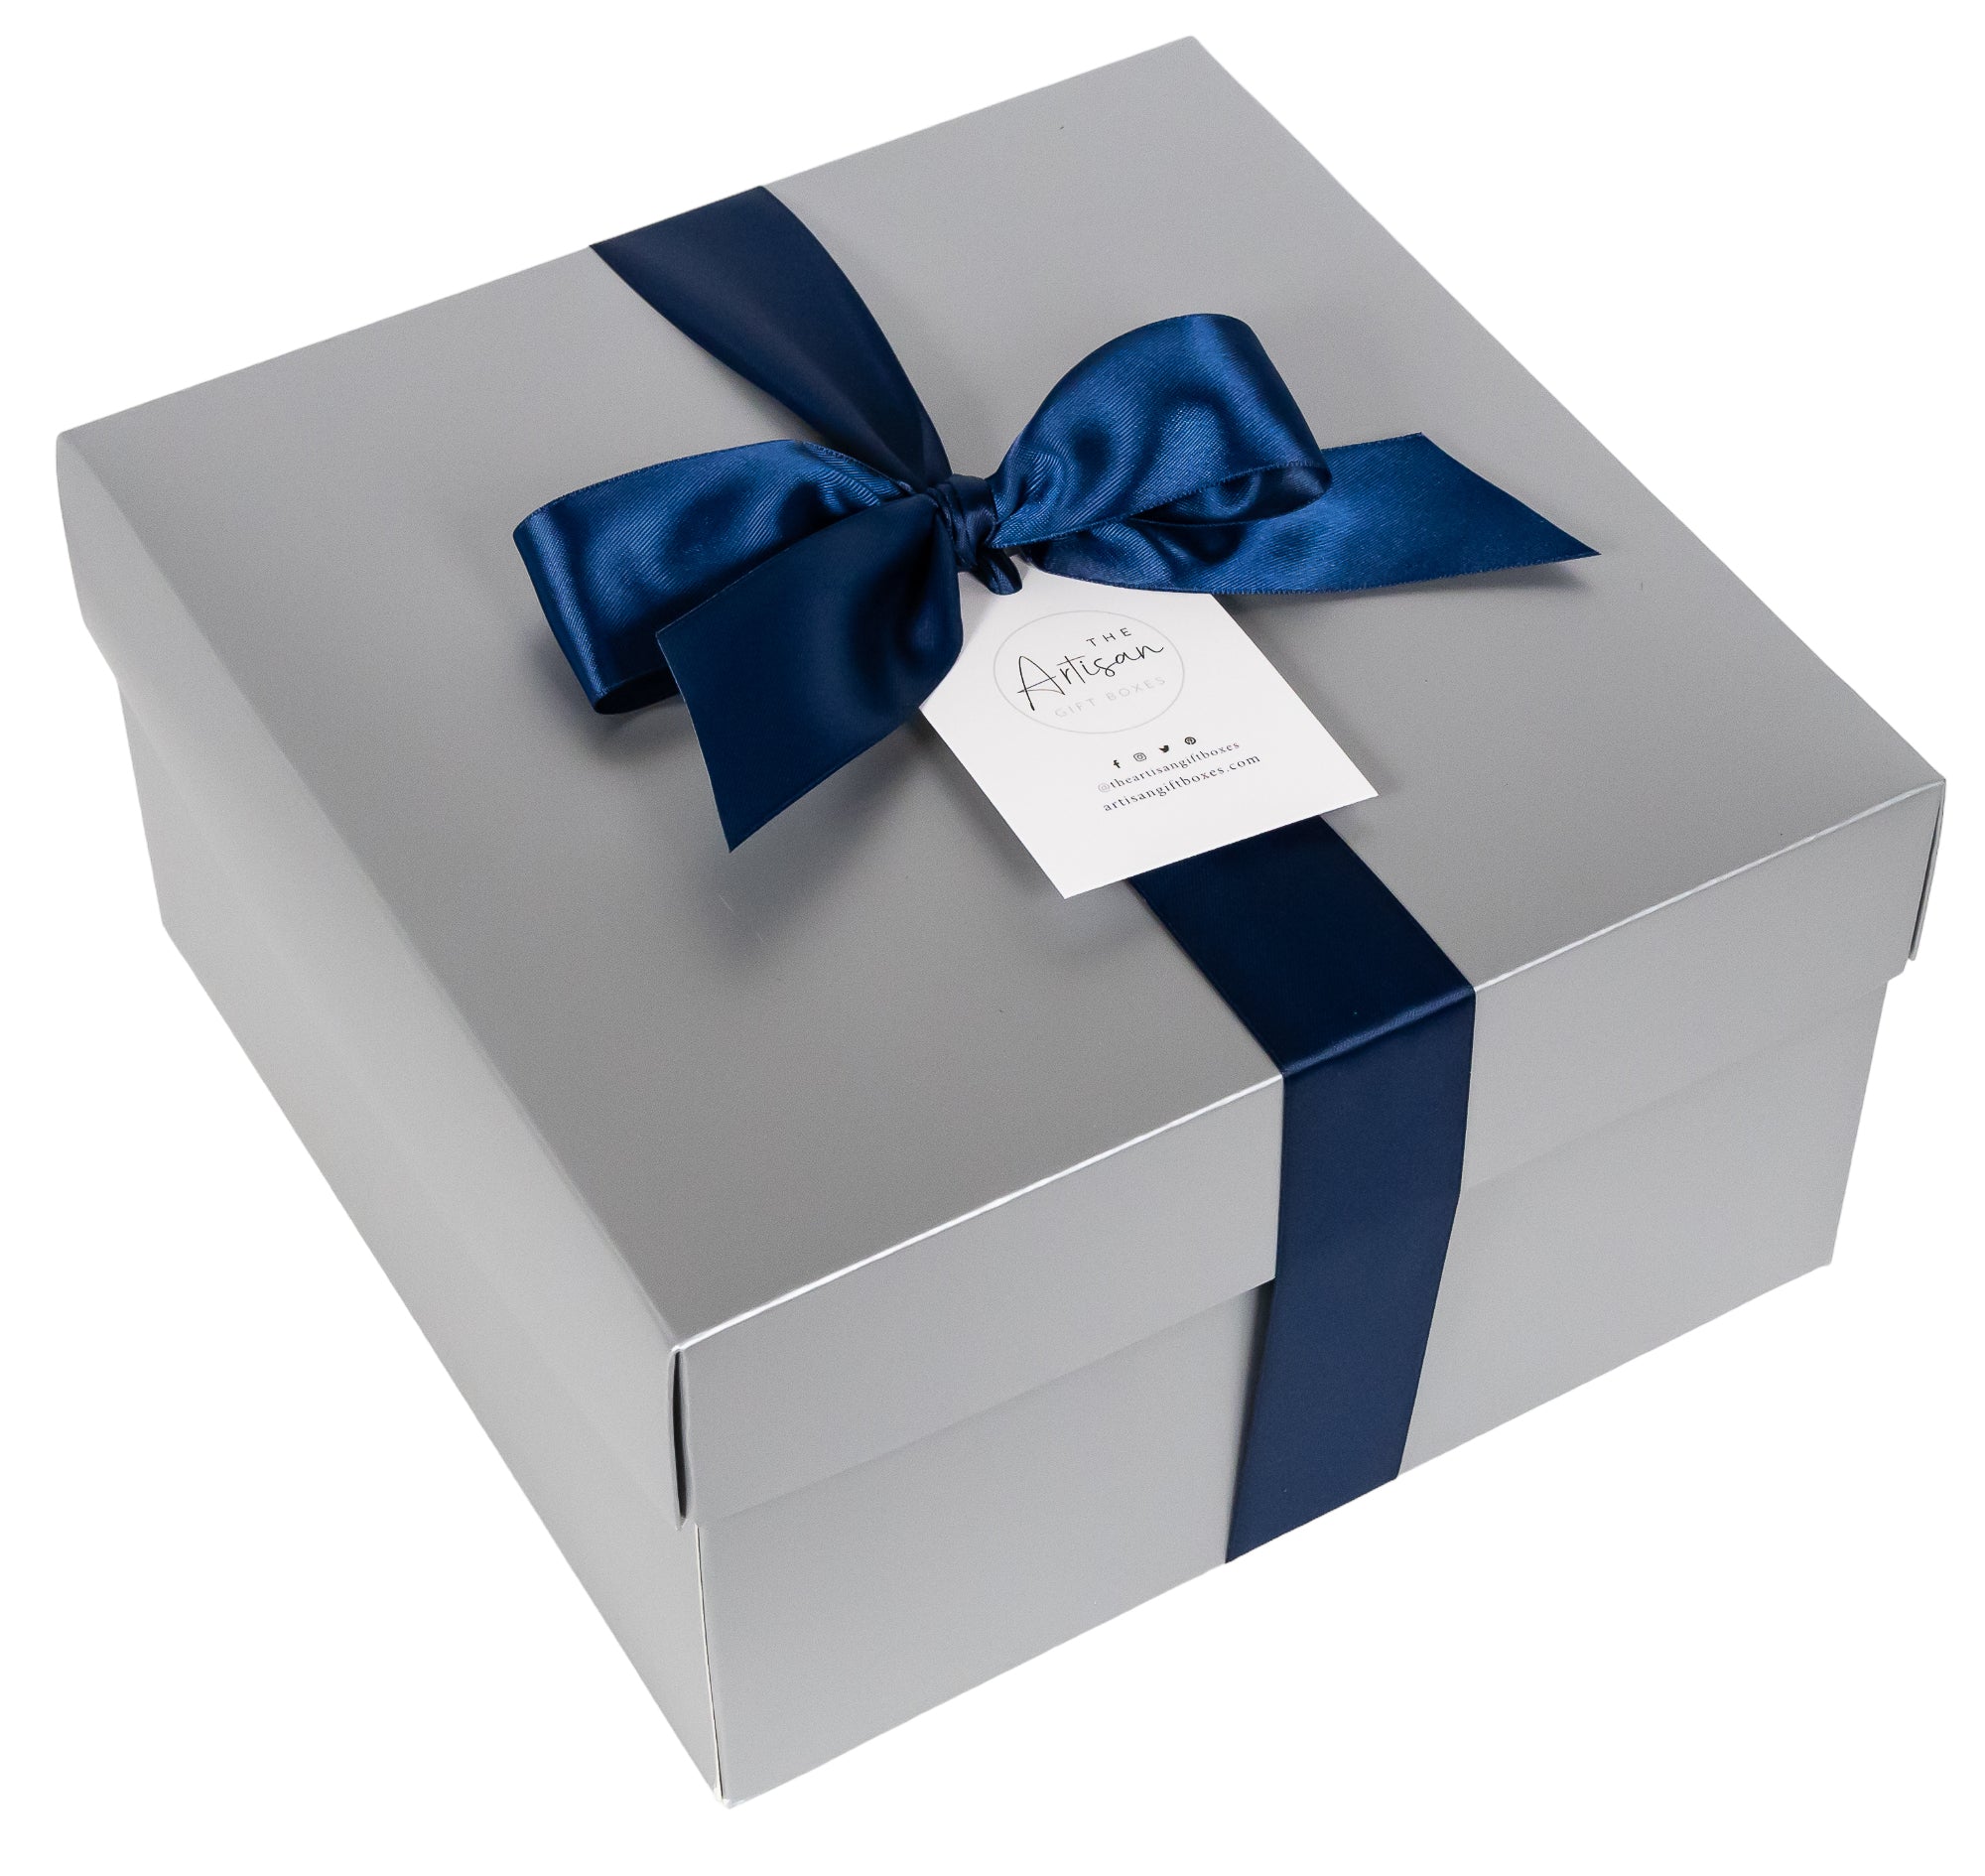 Gratitude Spa Gift Box